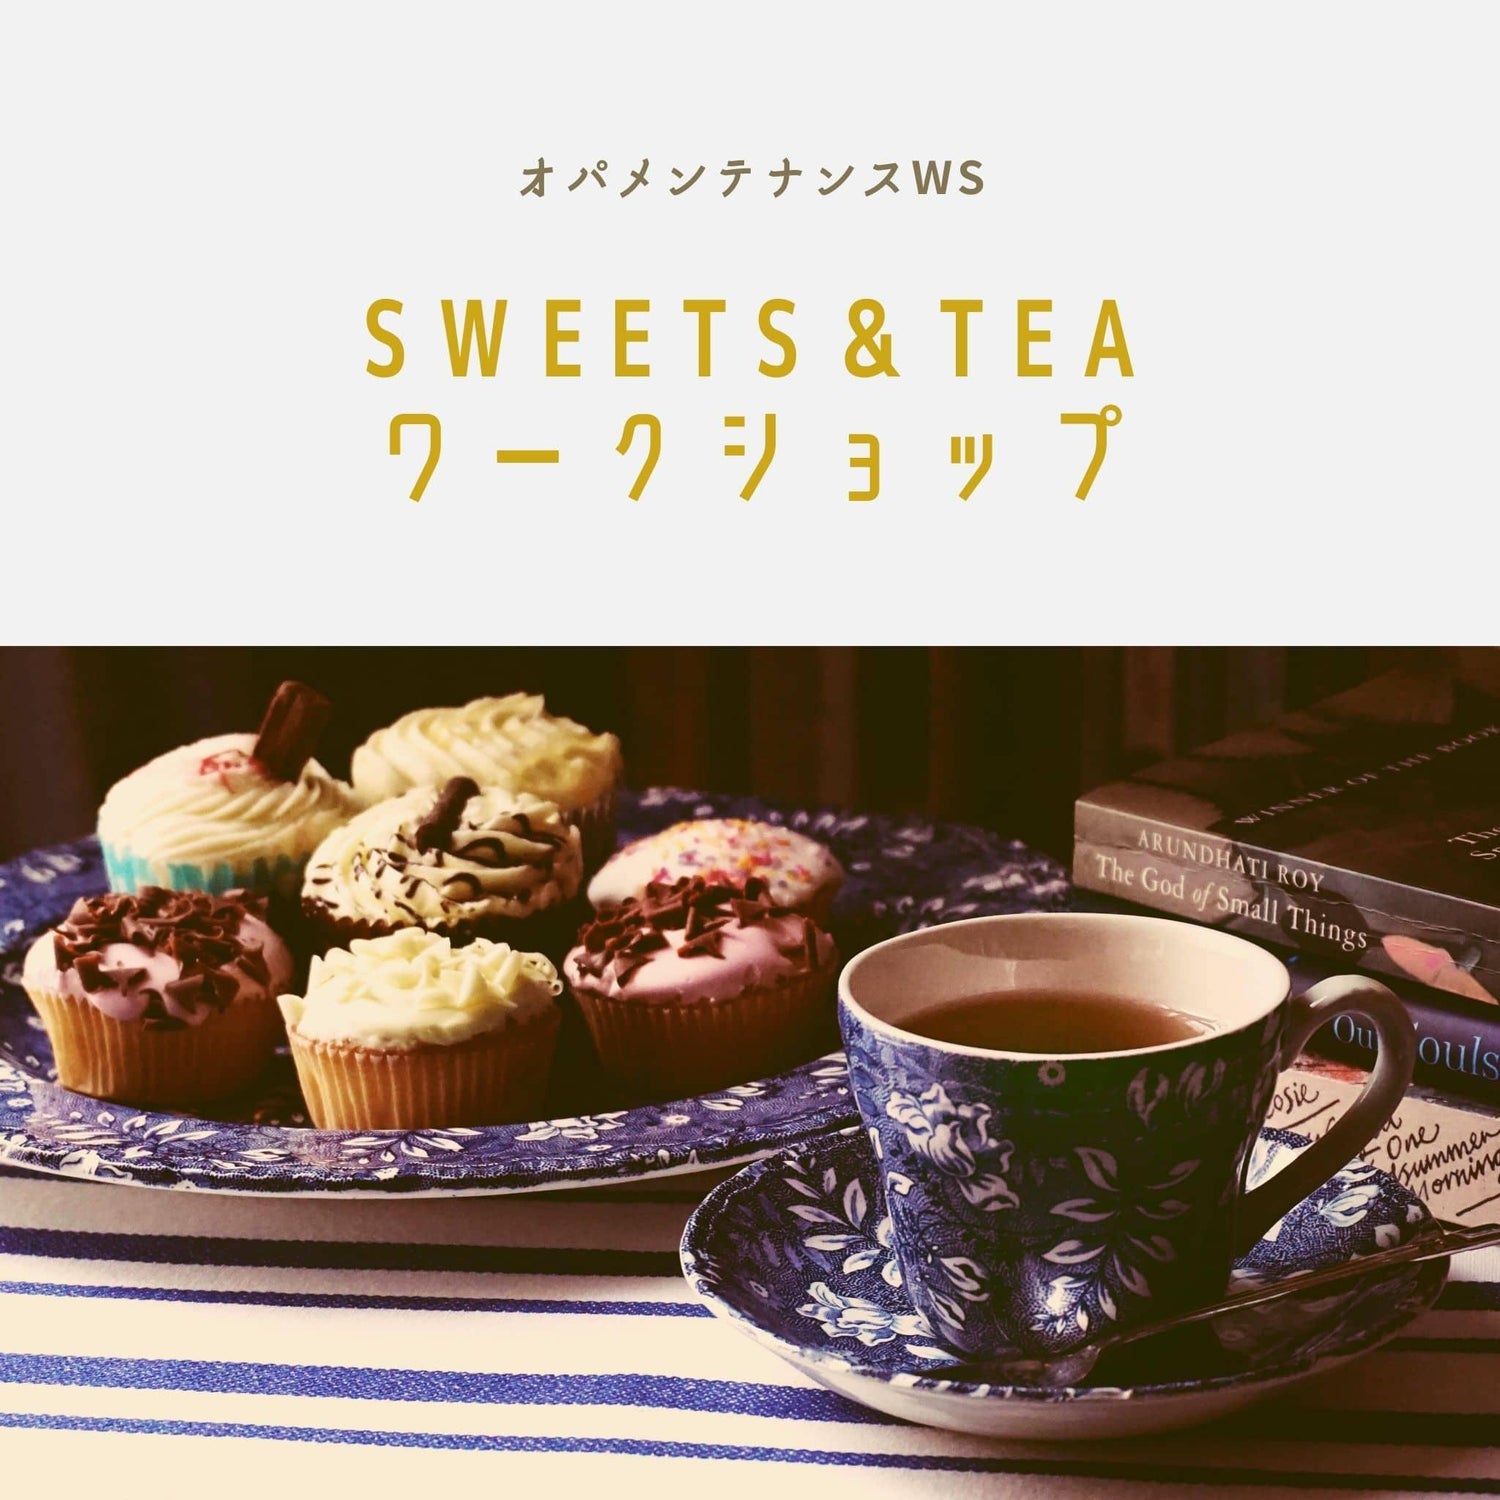 Sweets & Tea ワークショップ - オパ処あさひ